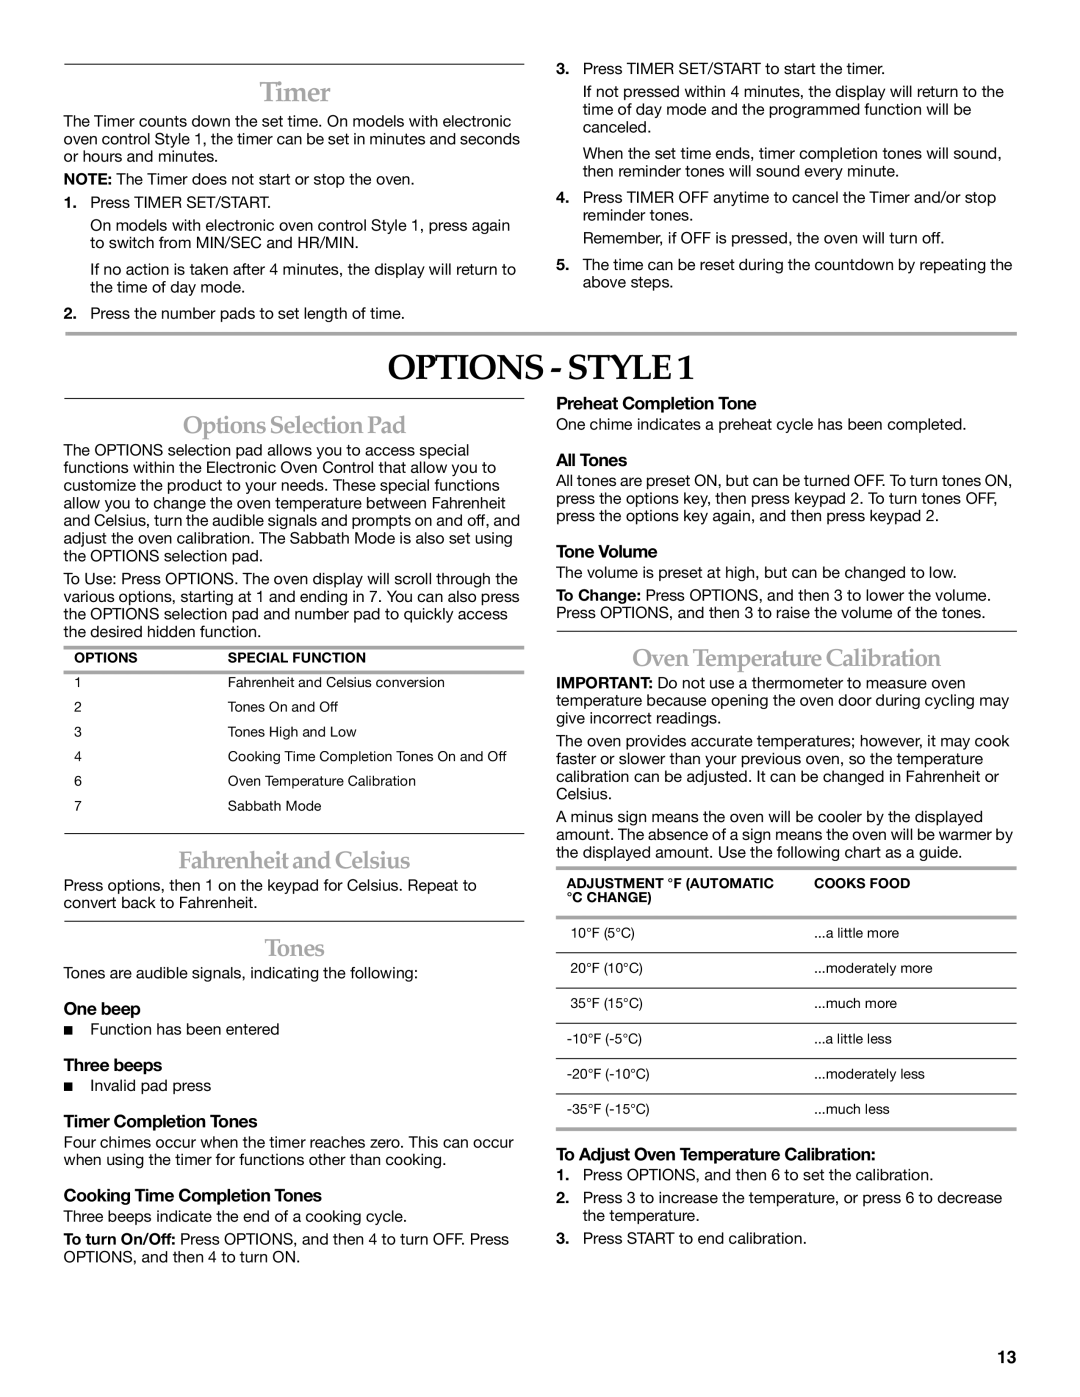 KitchenAid KERI201 manual Options Style, OptionsSelection Pad, Fahrenheit and Celsius, Tones, Oven Temperature Calibration 